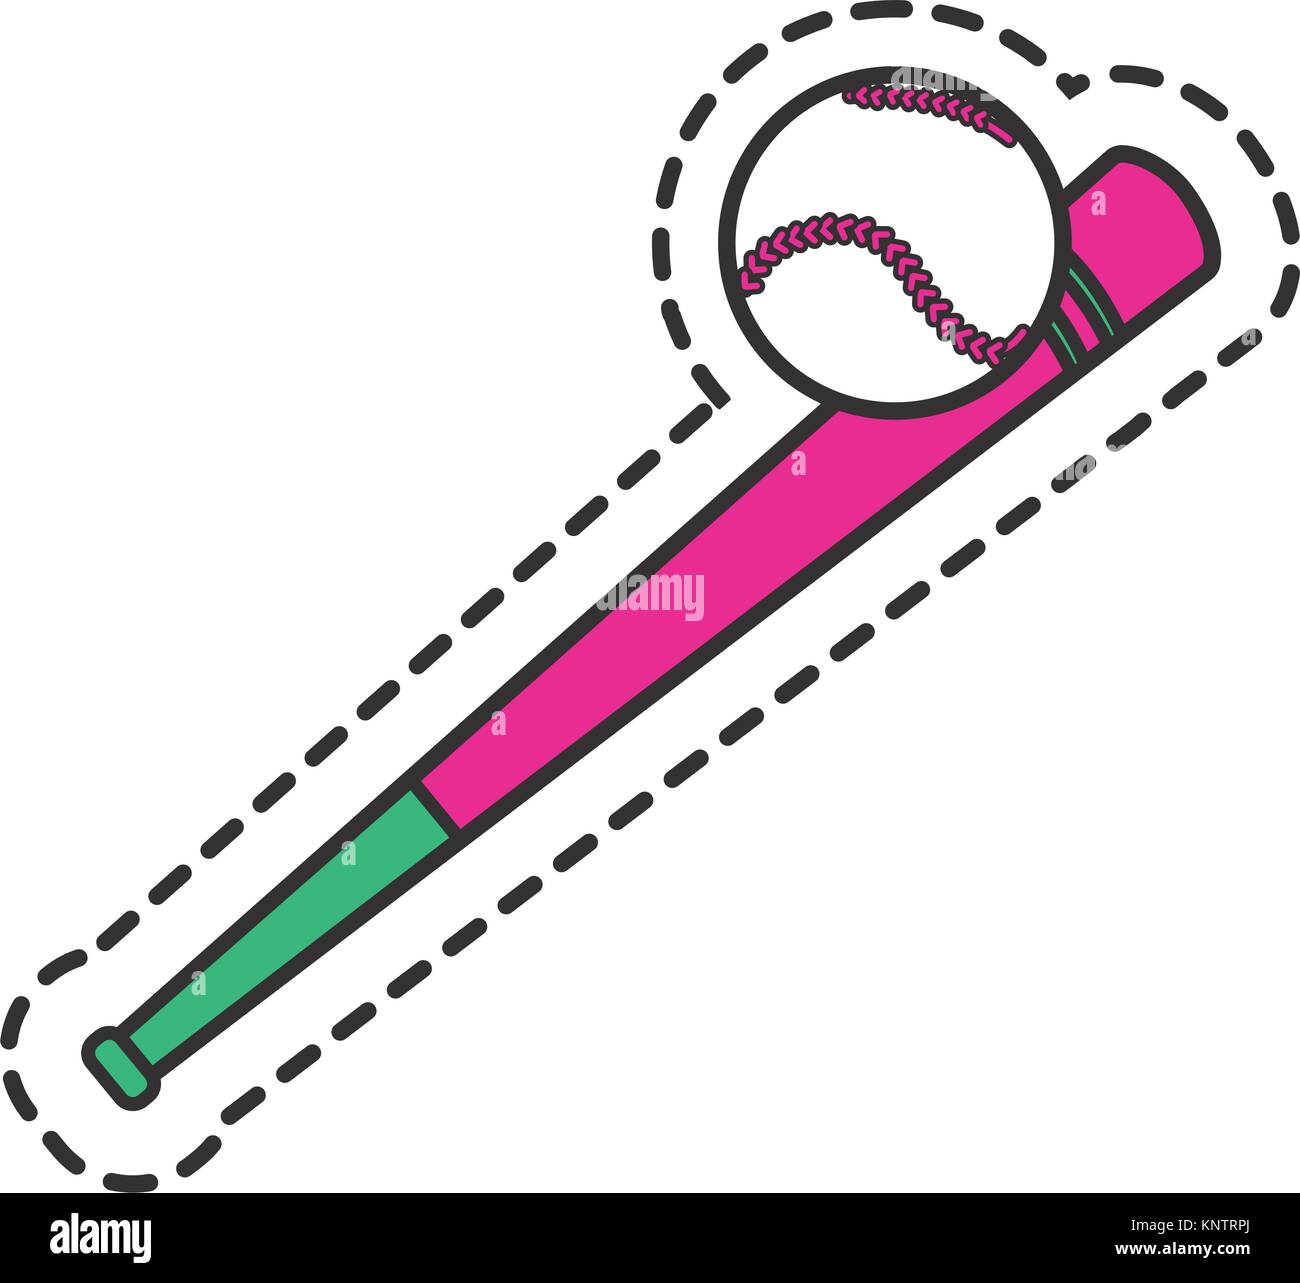 Baseball bat design Stock Vector